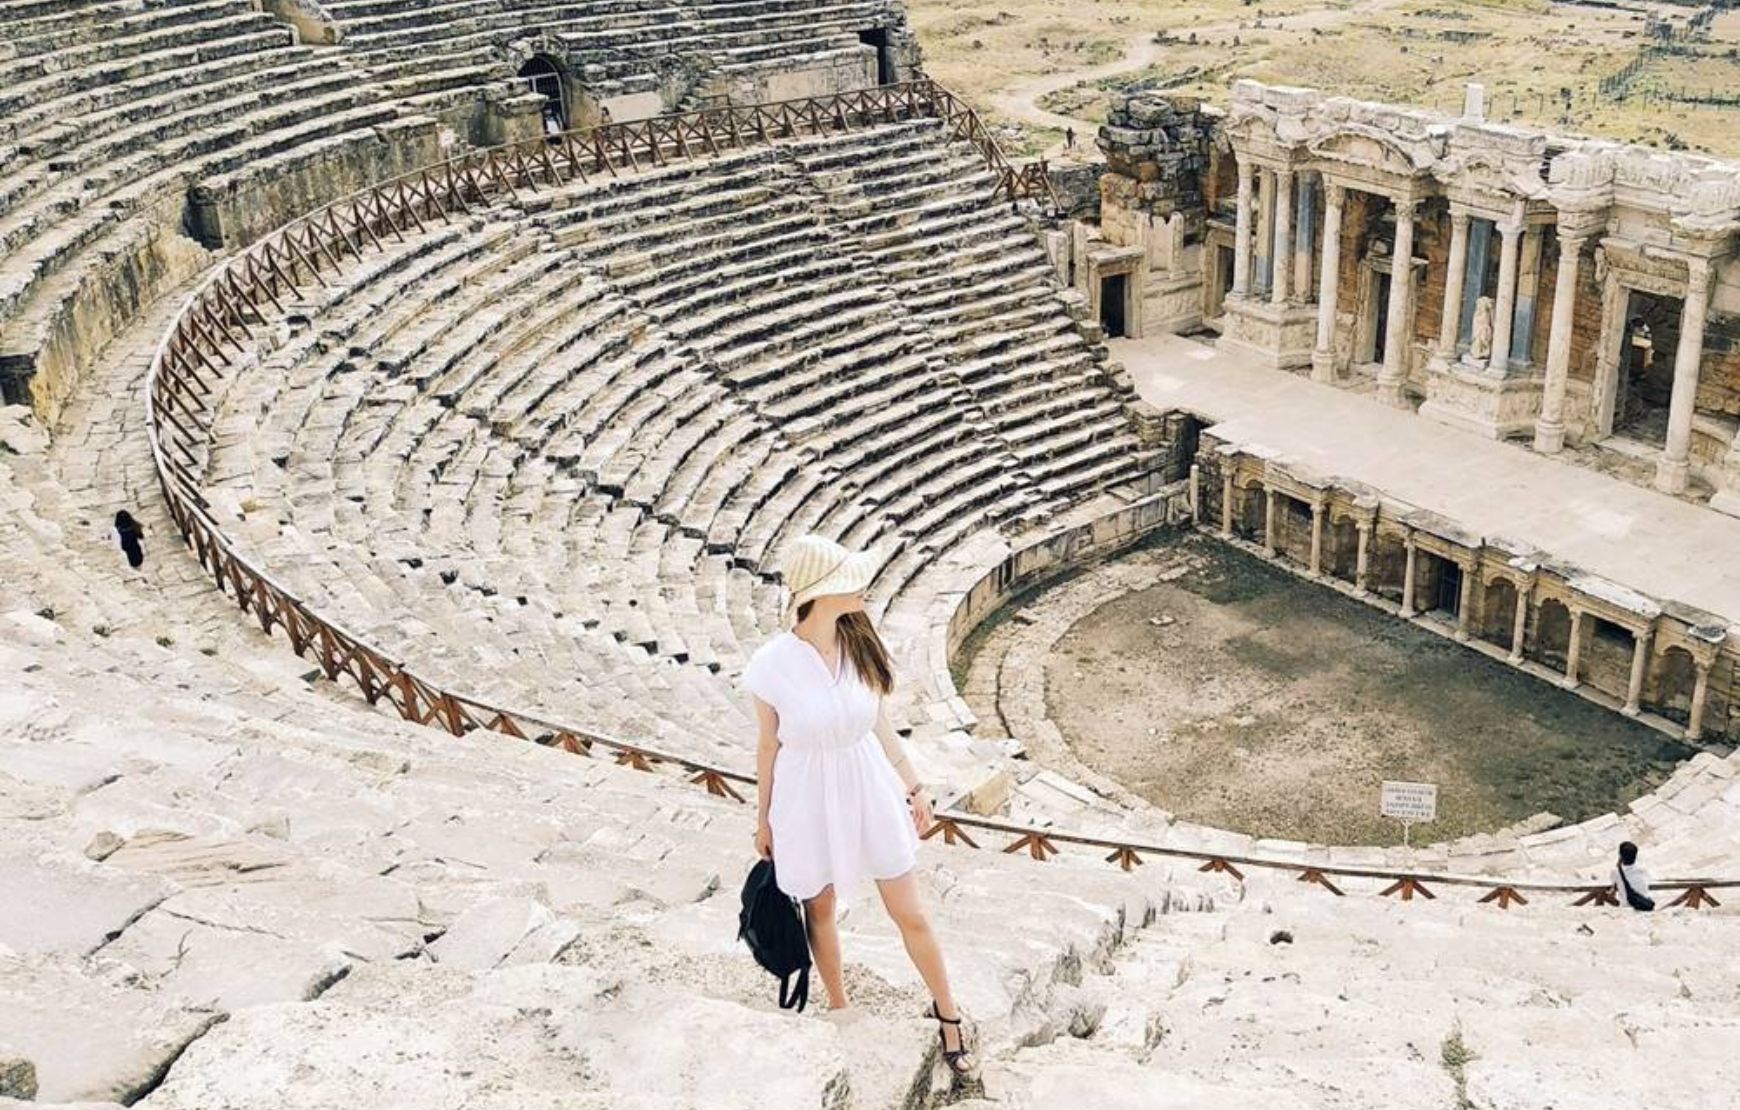 Theatre at Hierapolis Ancient City